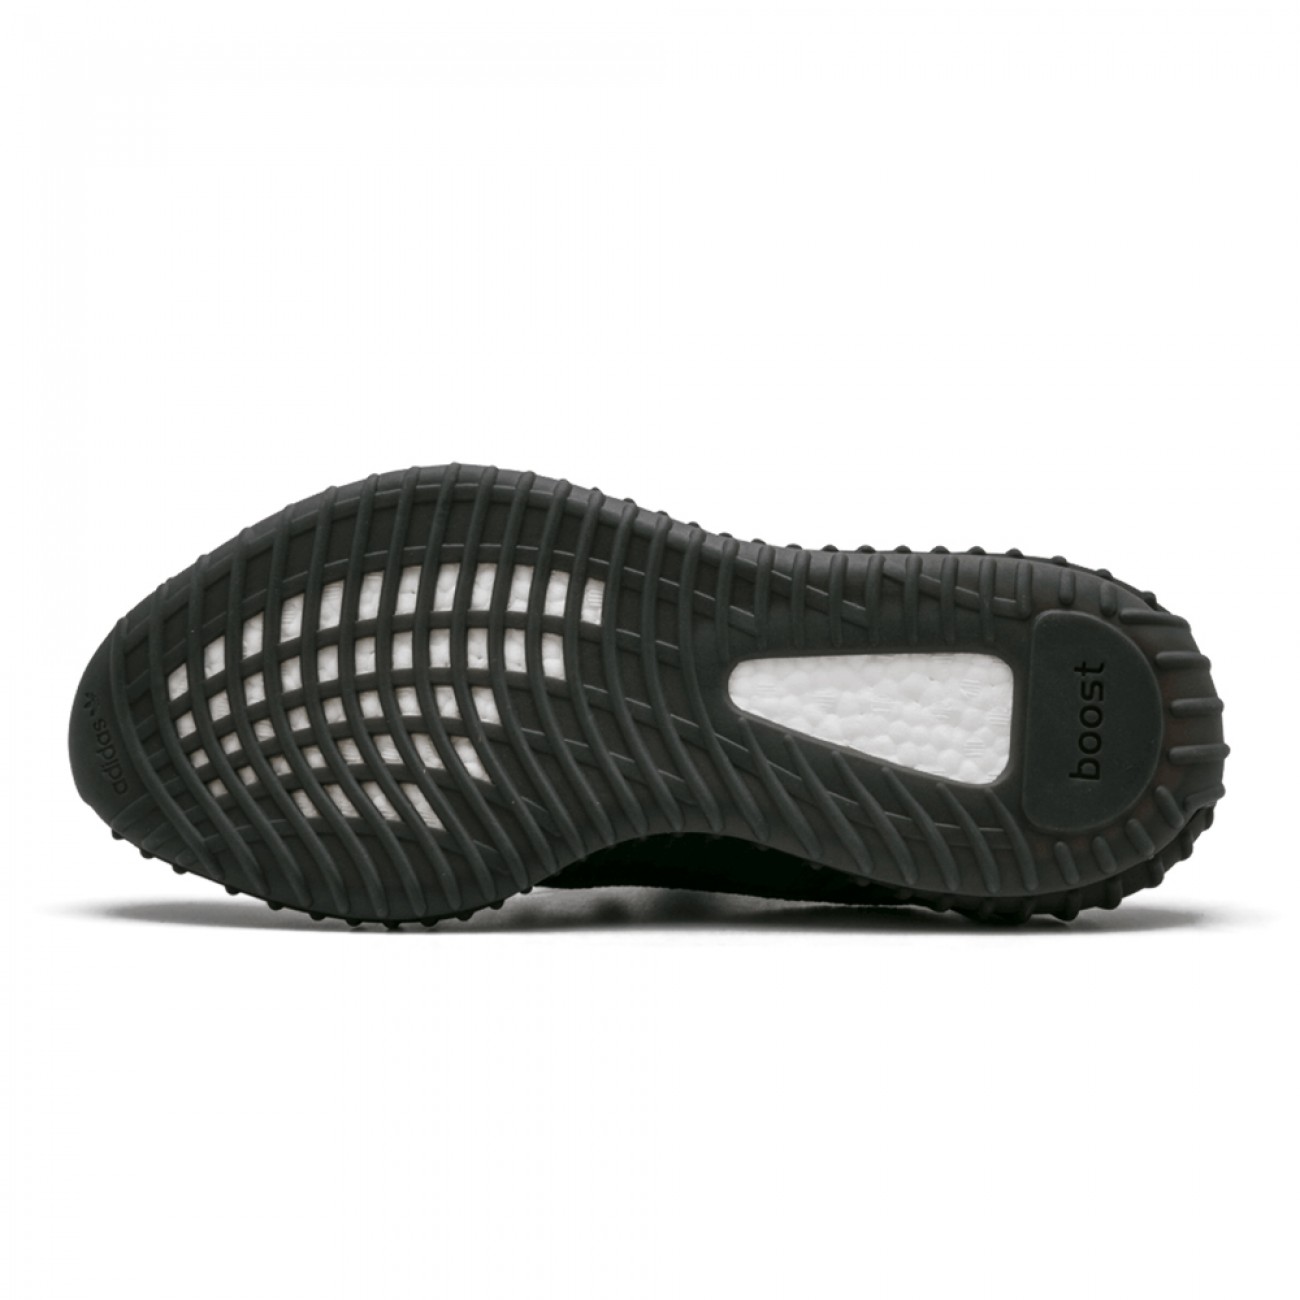 Adidas Originals Yeezy Boost 350 V2 Oreo "Black/White" BY1604